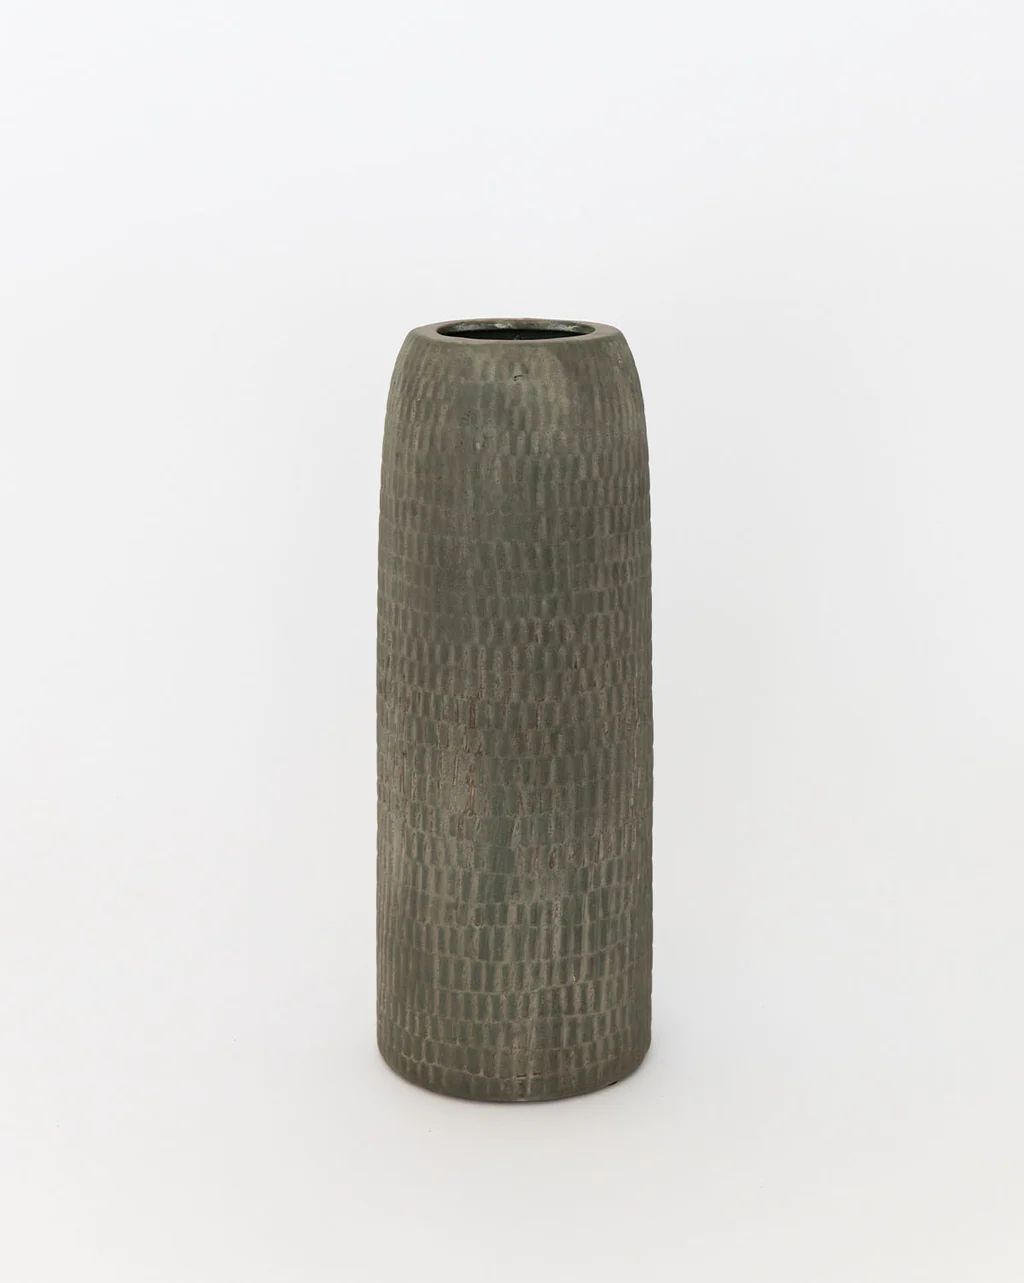 Phadra Grooved Vase | McGee & Co.